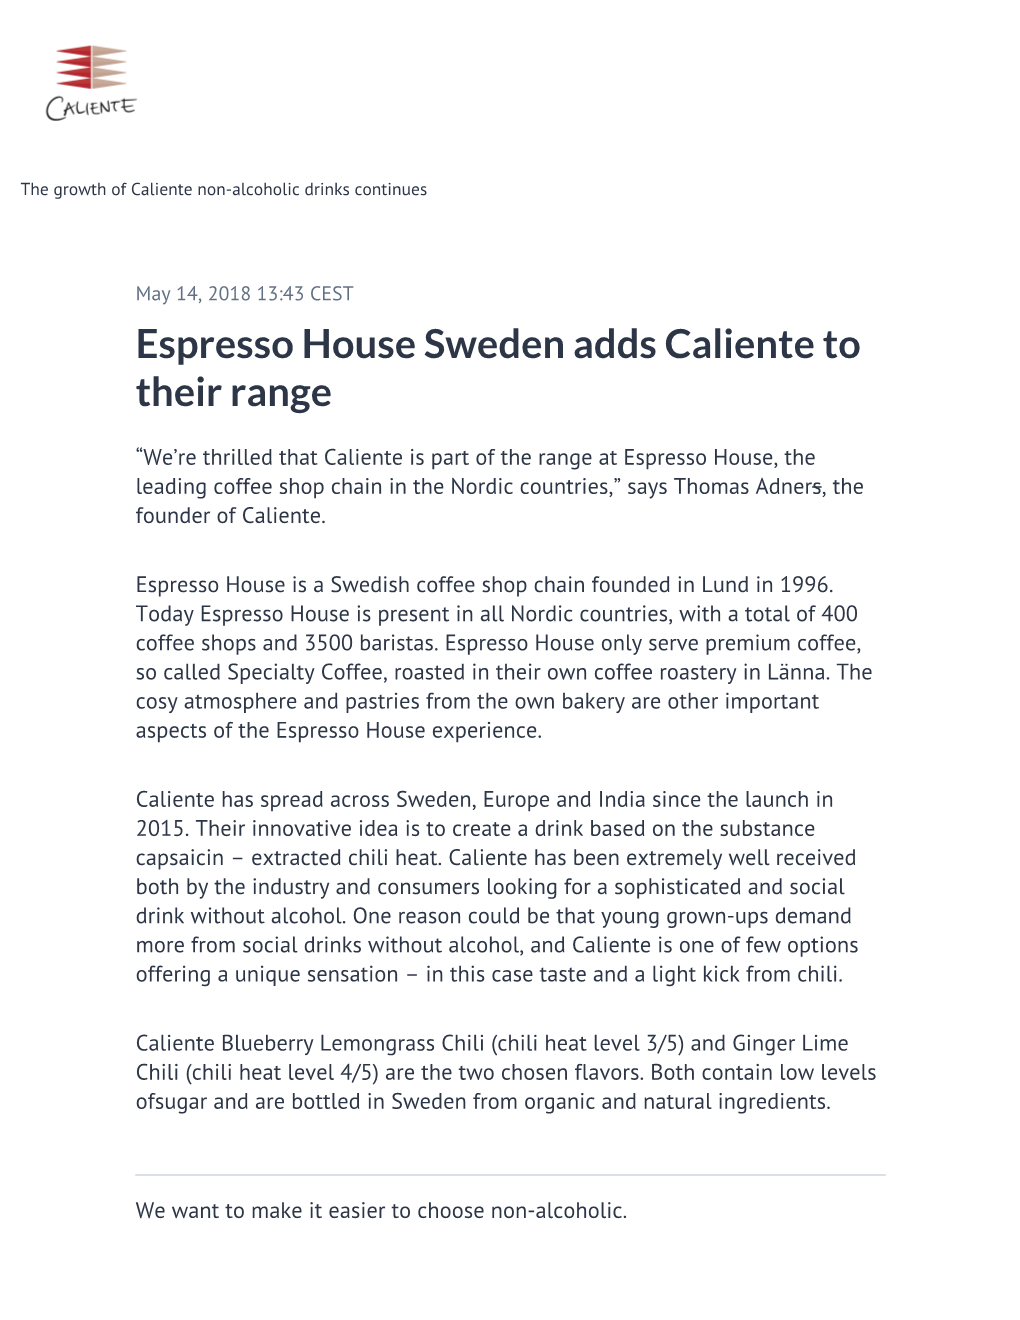 Espresso House Sweden Adds Caliente to Their Range